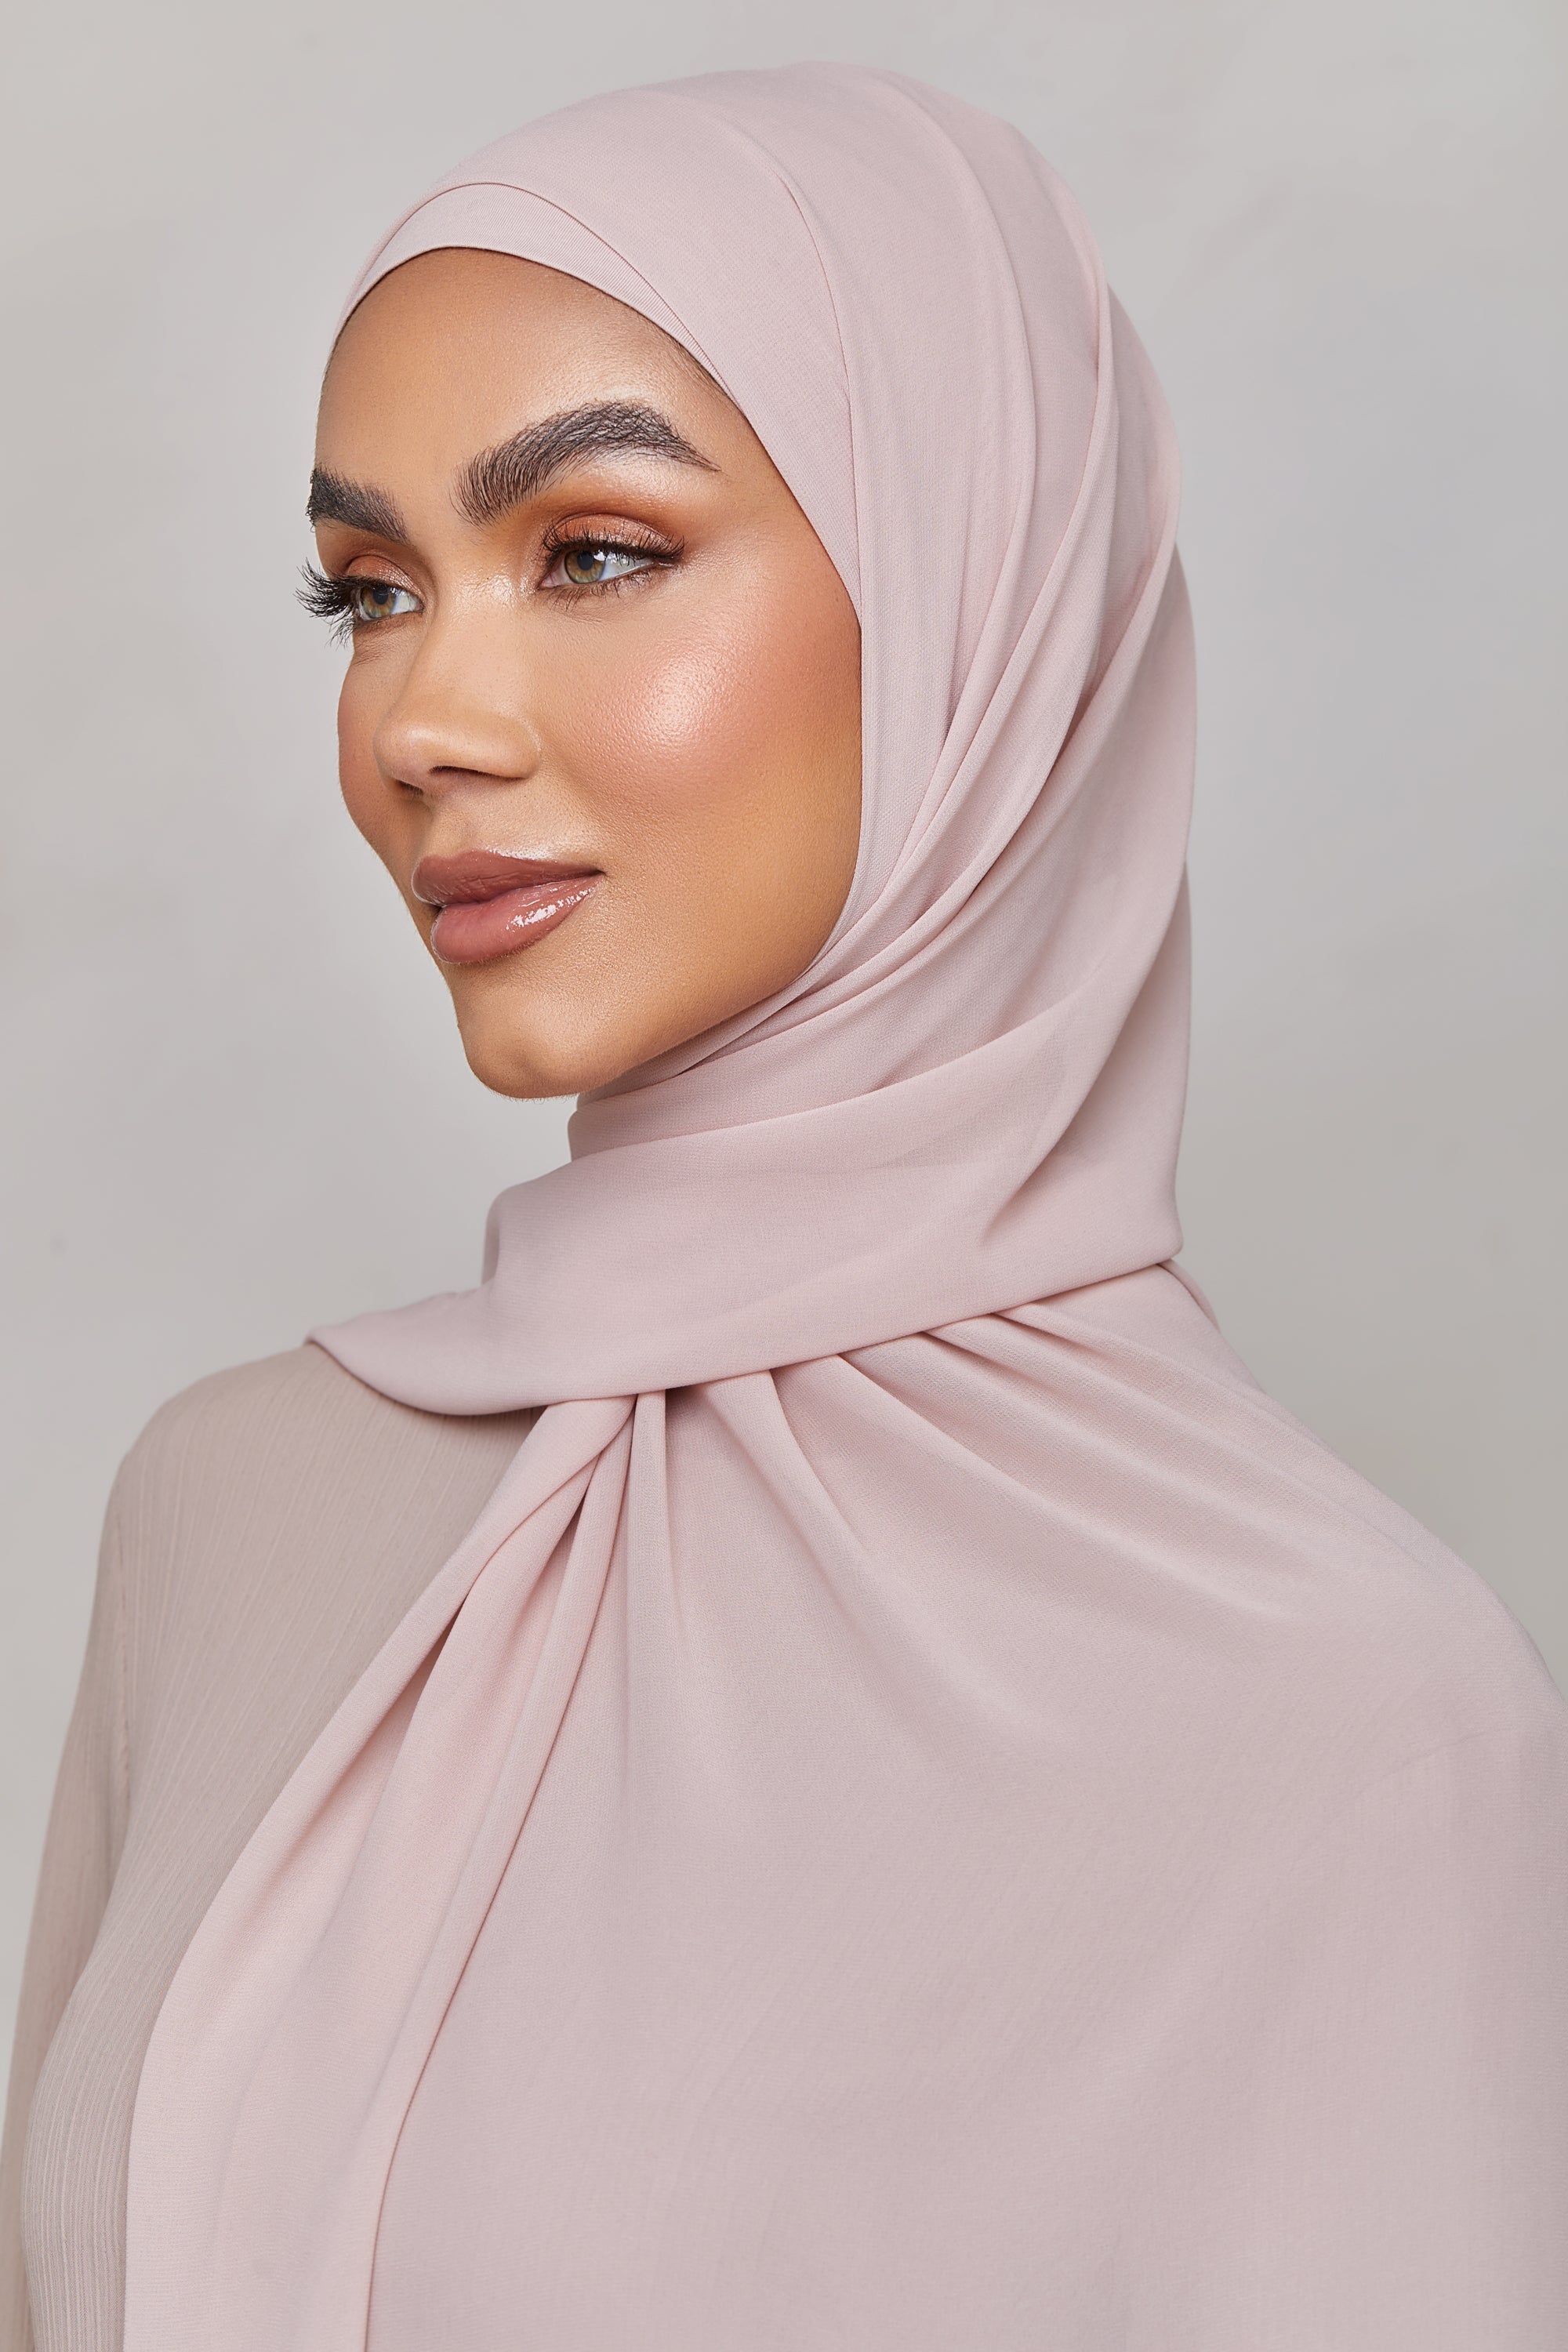 Chiffon LITE Hijab - Sepia Rose epschoolboard 